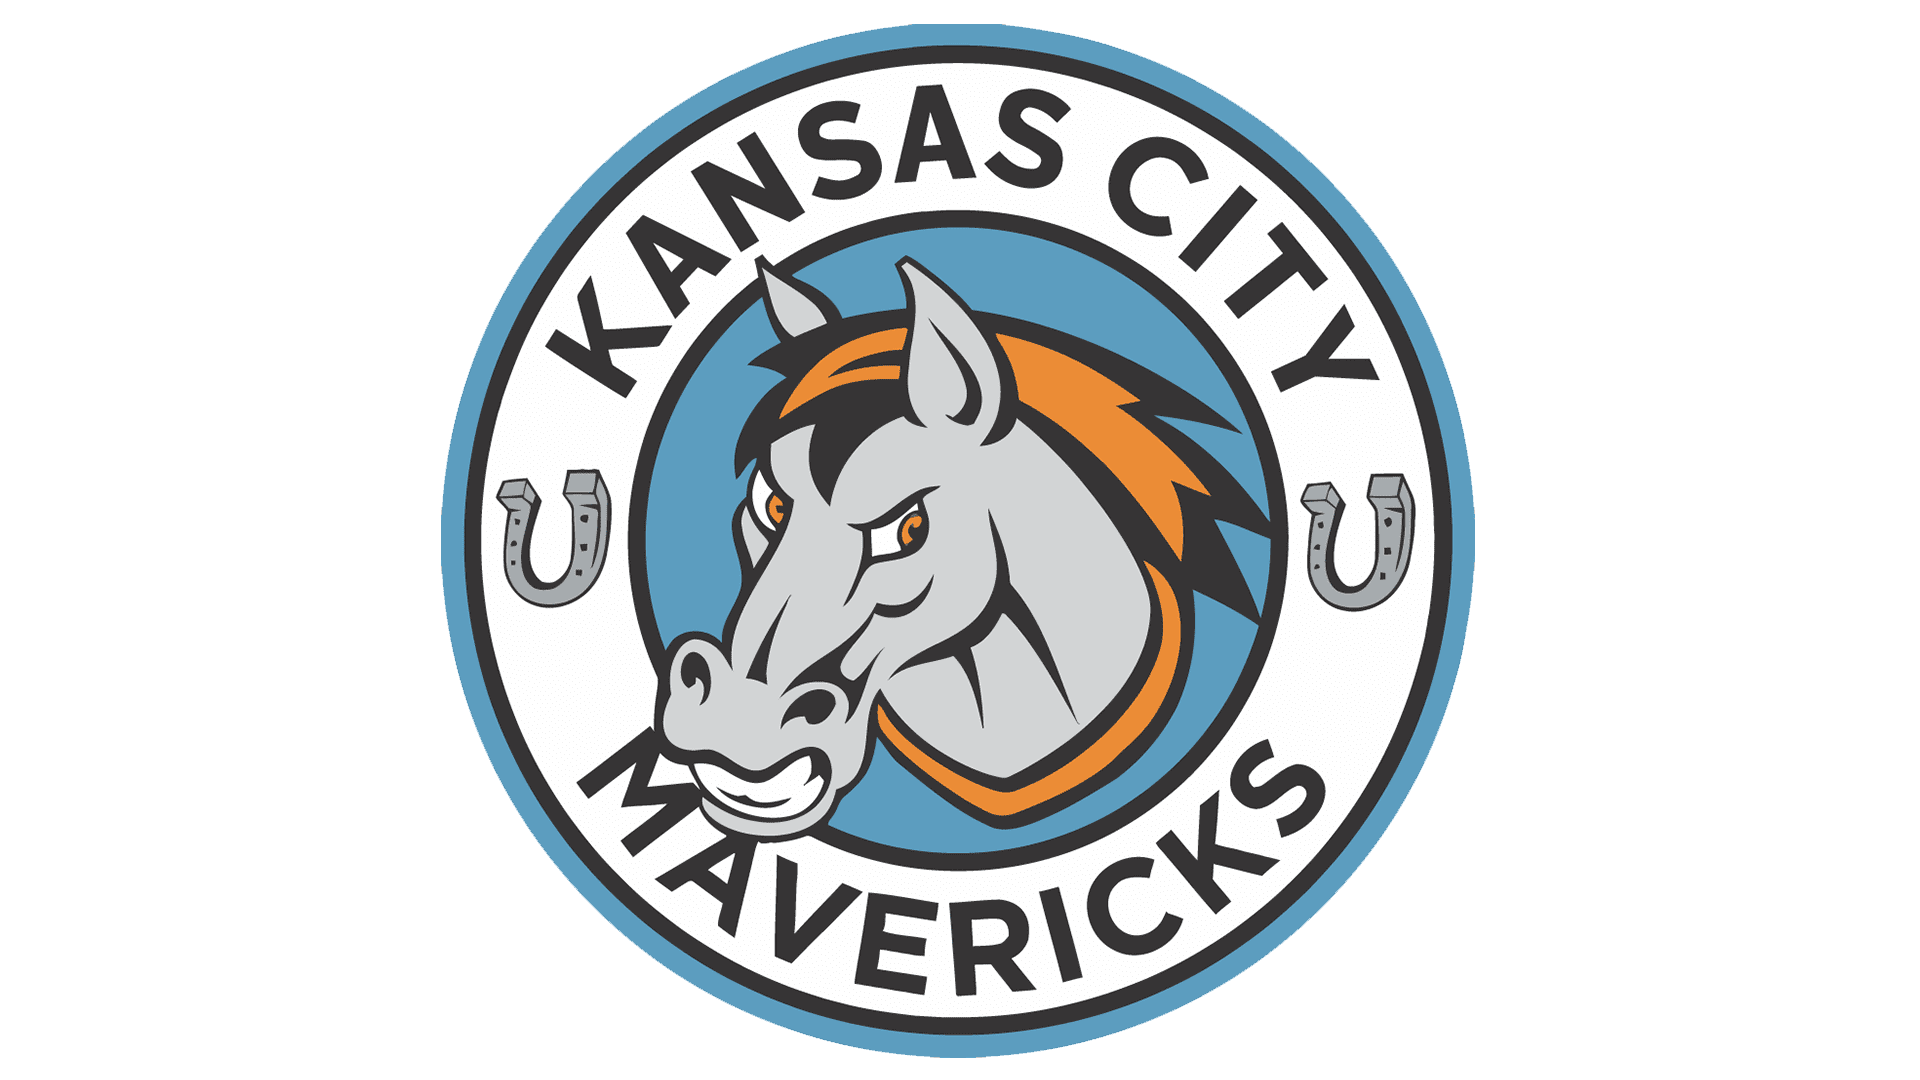 Kansas City Mavericks - Wikipedia